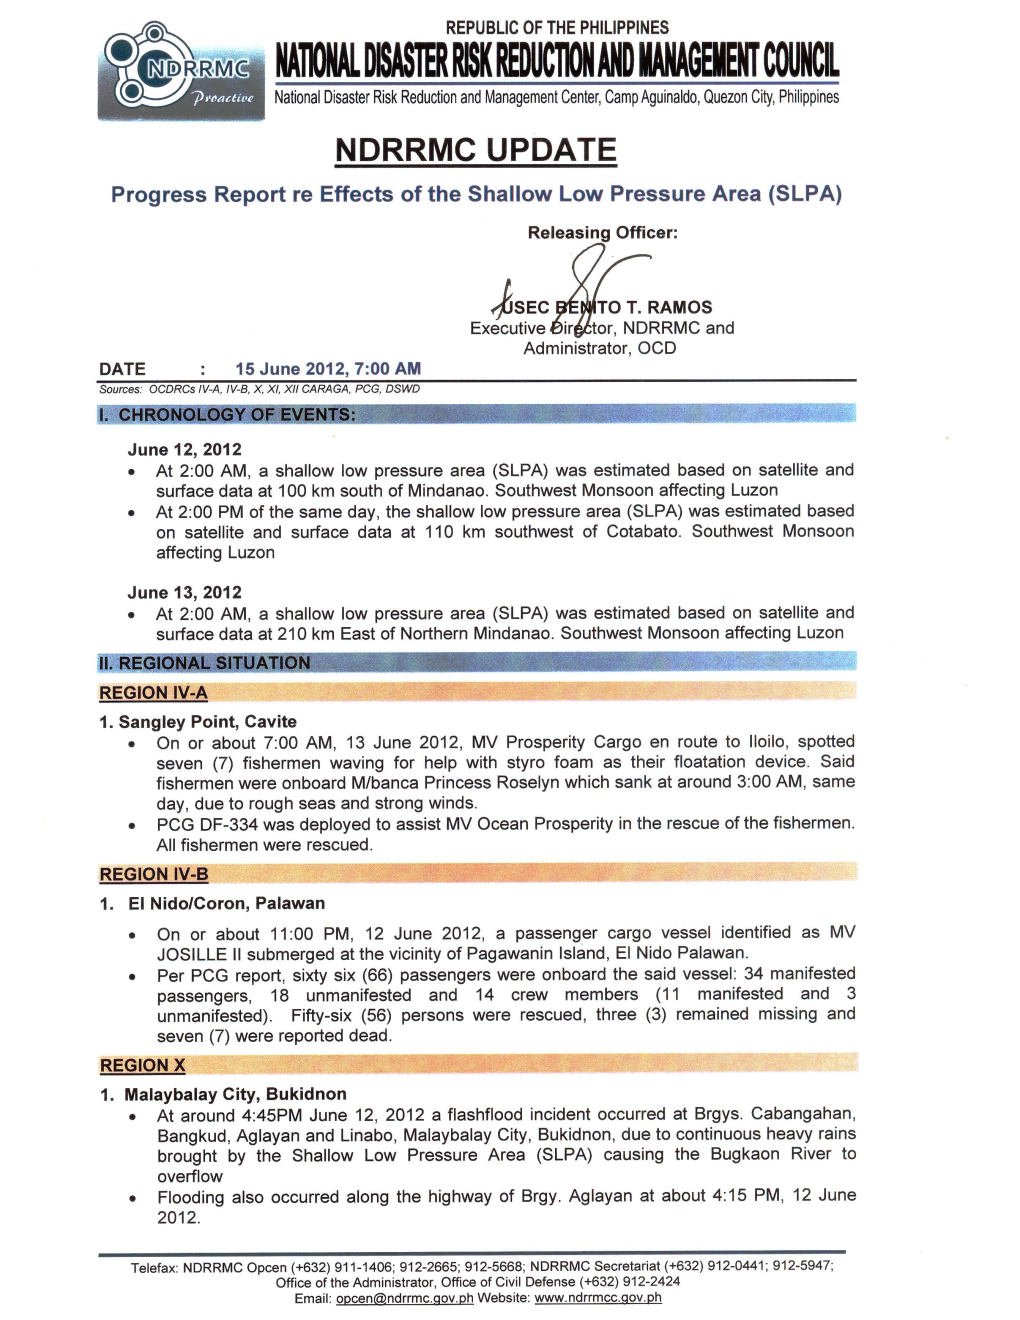 NDRRMC Update Progress Report Re Effects of the SLPA, 15 June 2012